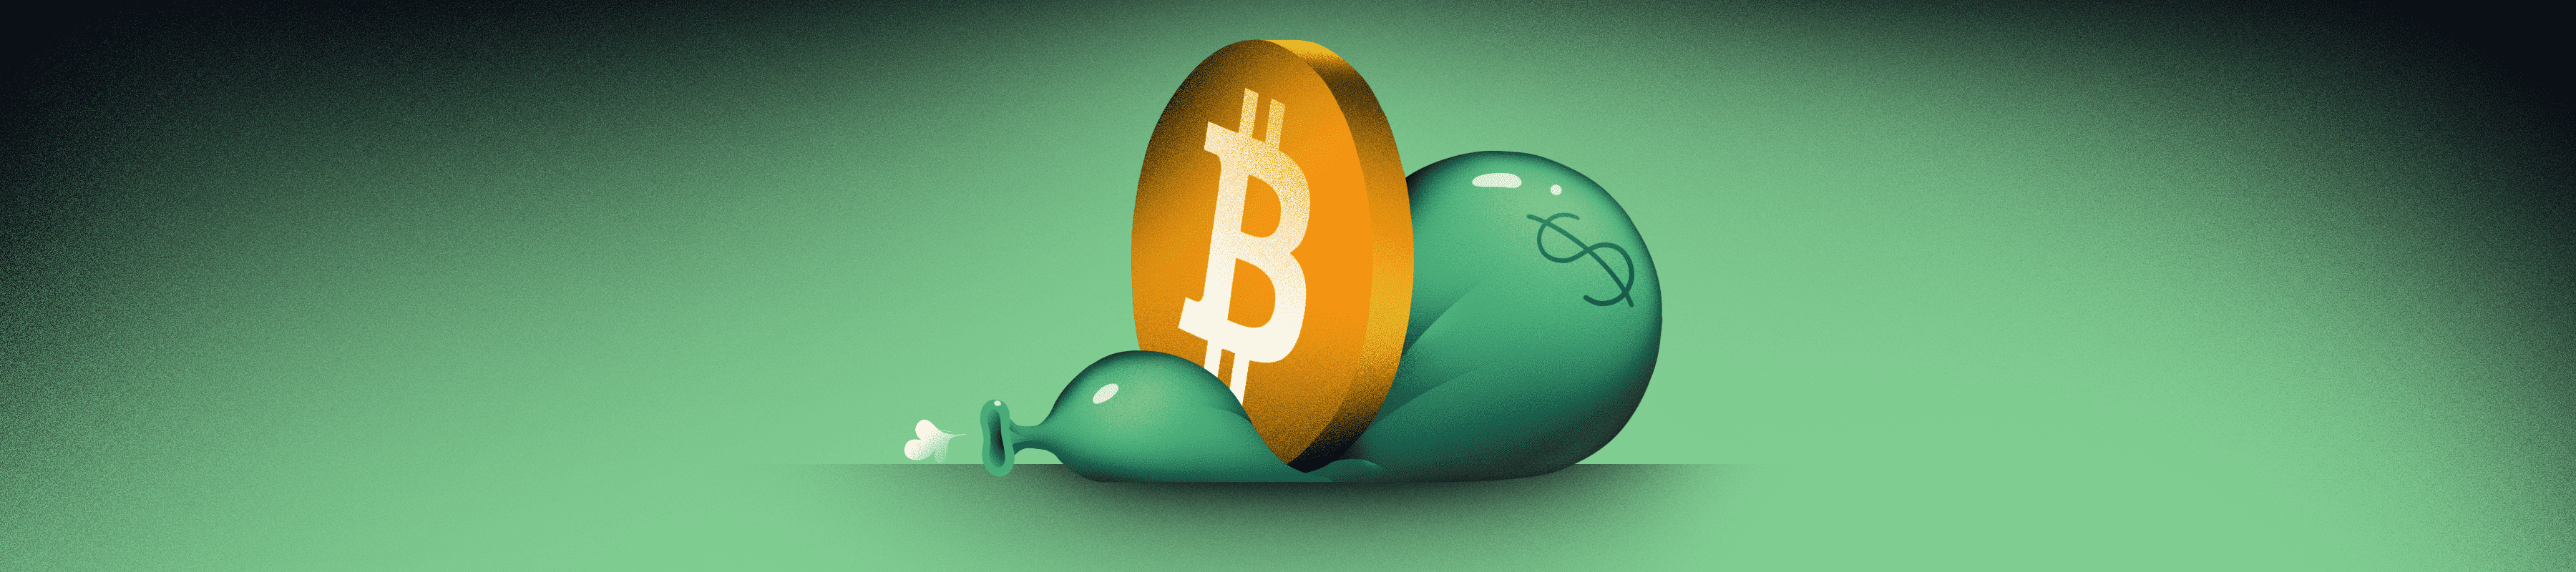 Menghindari inflasi dengan Bitcoin: Crypto sebagai pelindung nilai